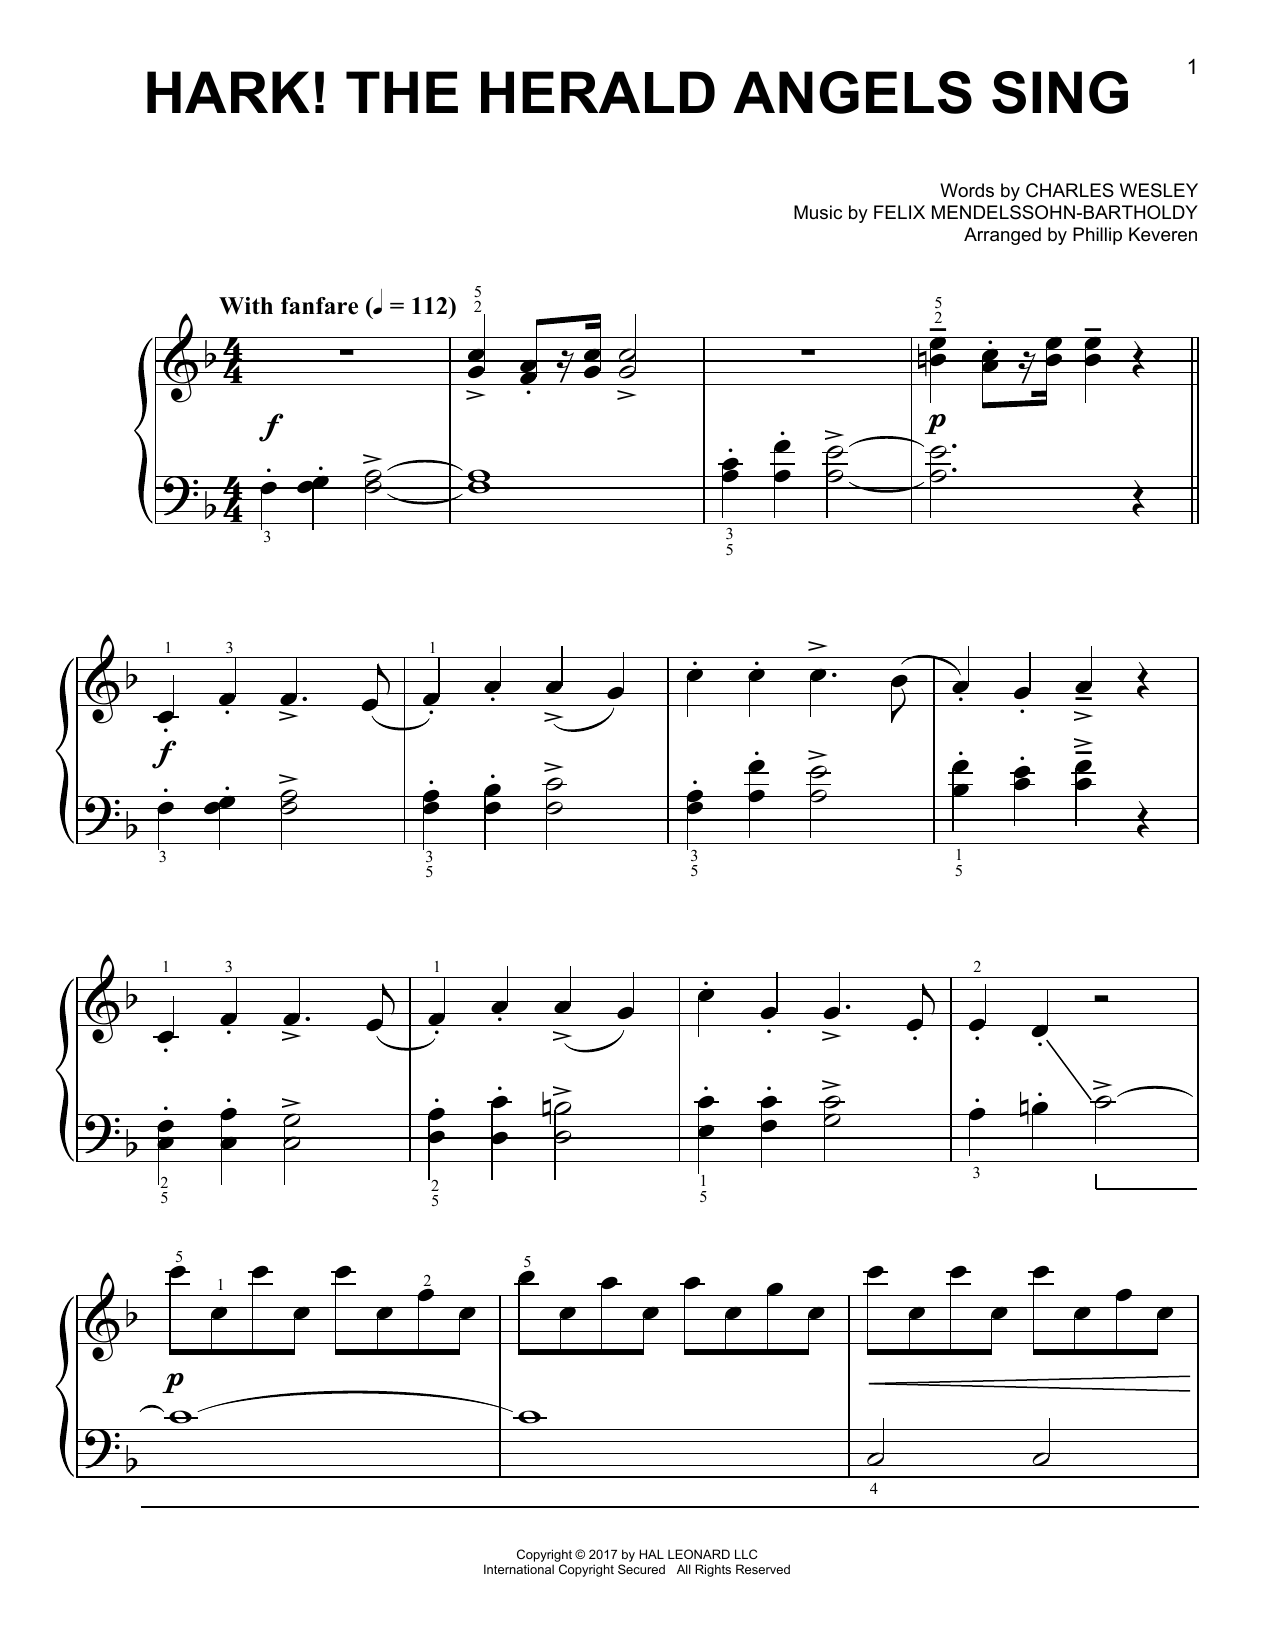 Felix Mendelssohn-Bartholdy Hark! The Herald Angels Sing [Classical version] (arr. Phillip Keveren) Sheet Music Notes & Chords for Easy Piano - Download or Print PDF